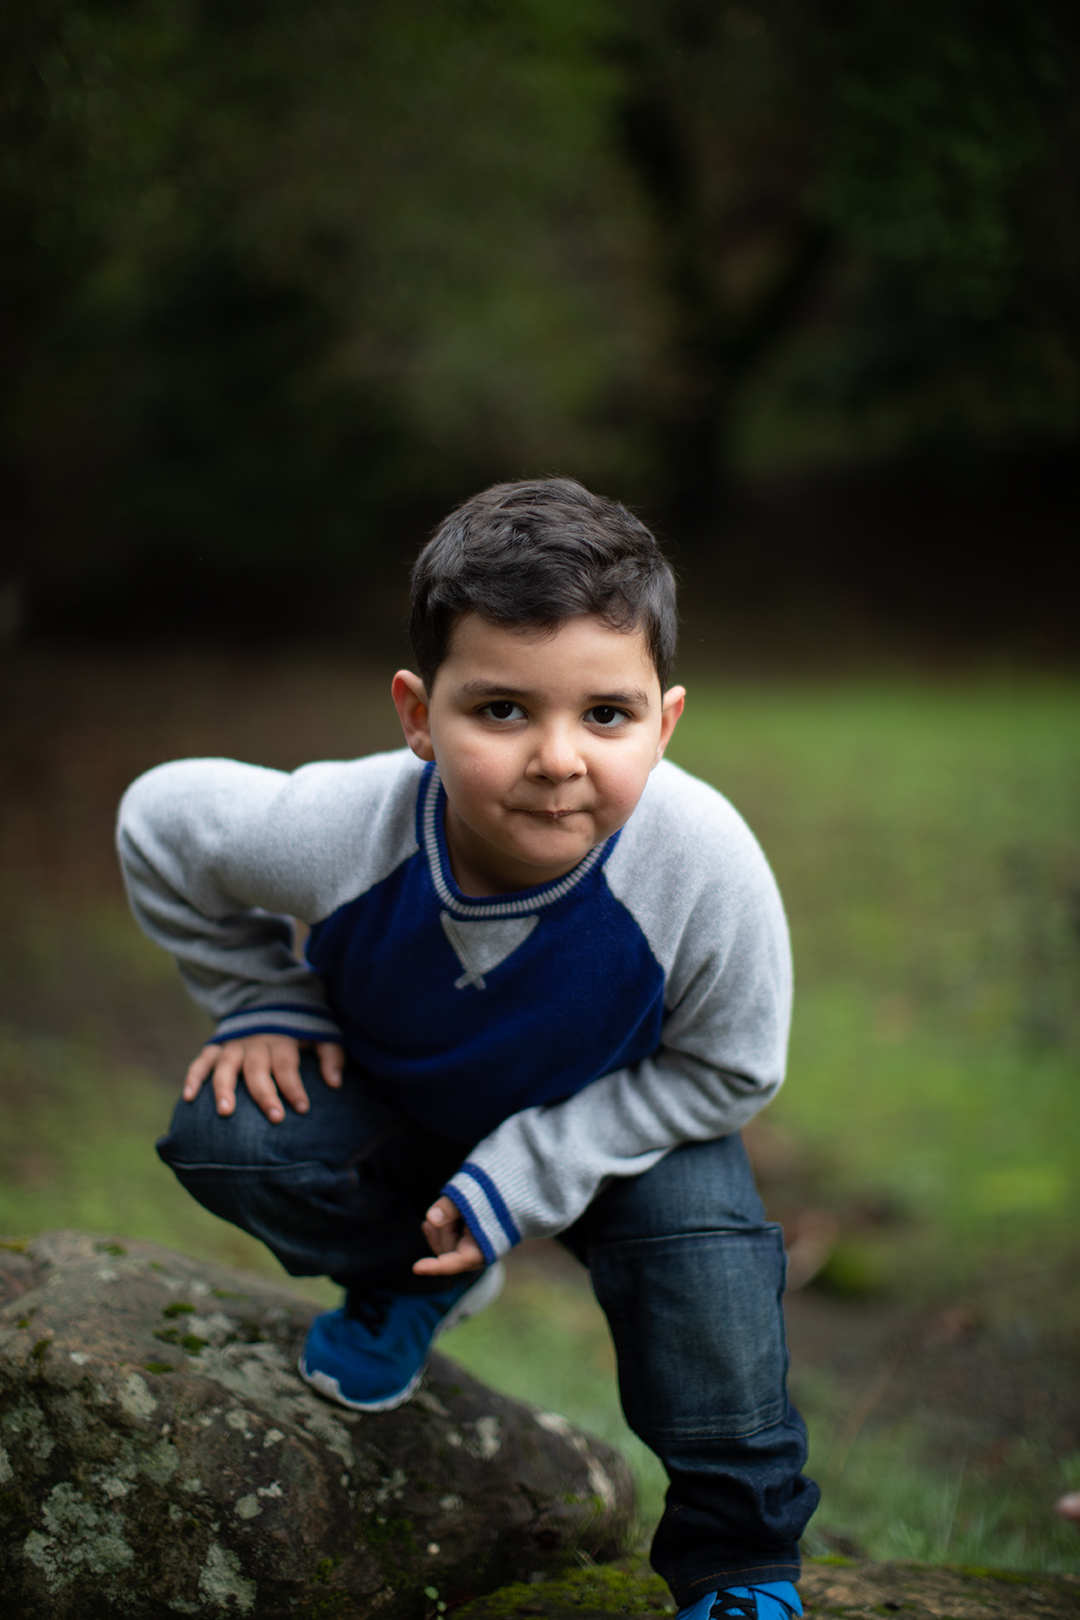 Cute Outdoor Portrait of Young Boy in the San Francisco Bay Area (Copy)